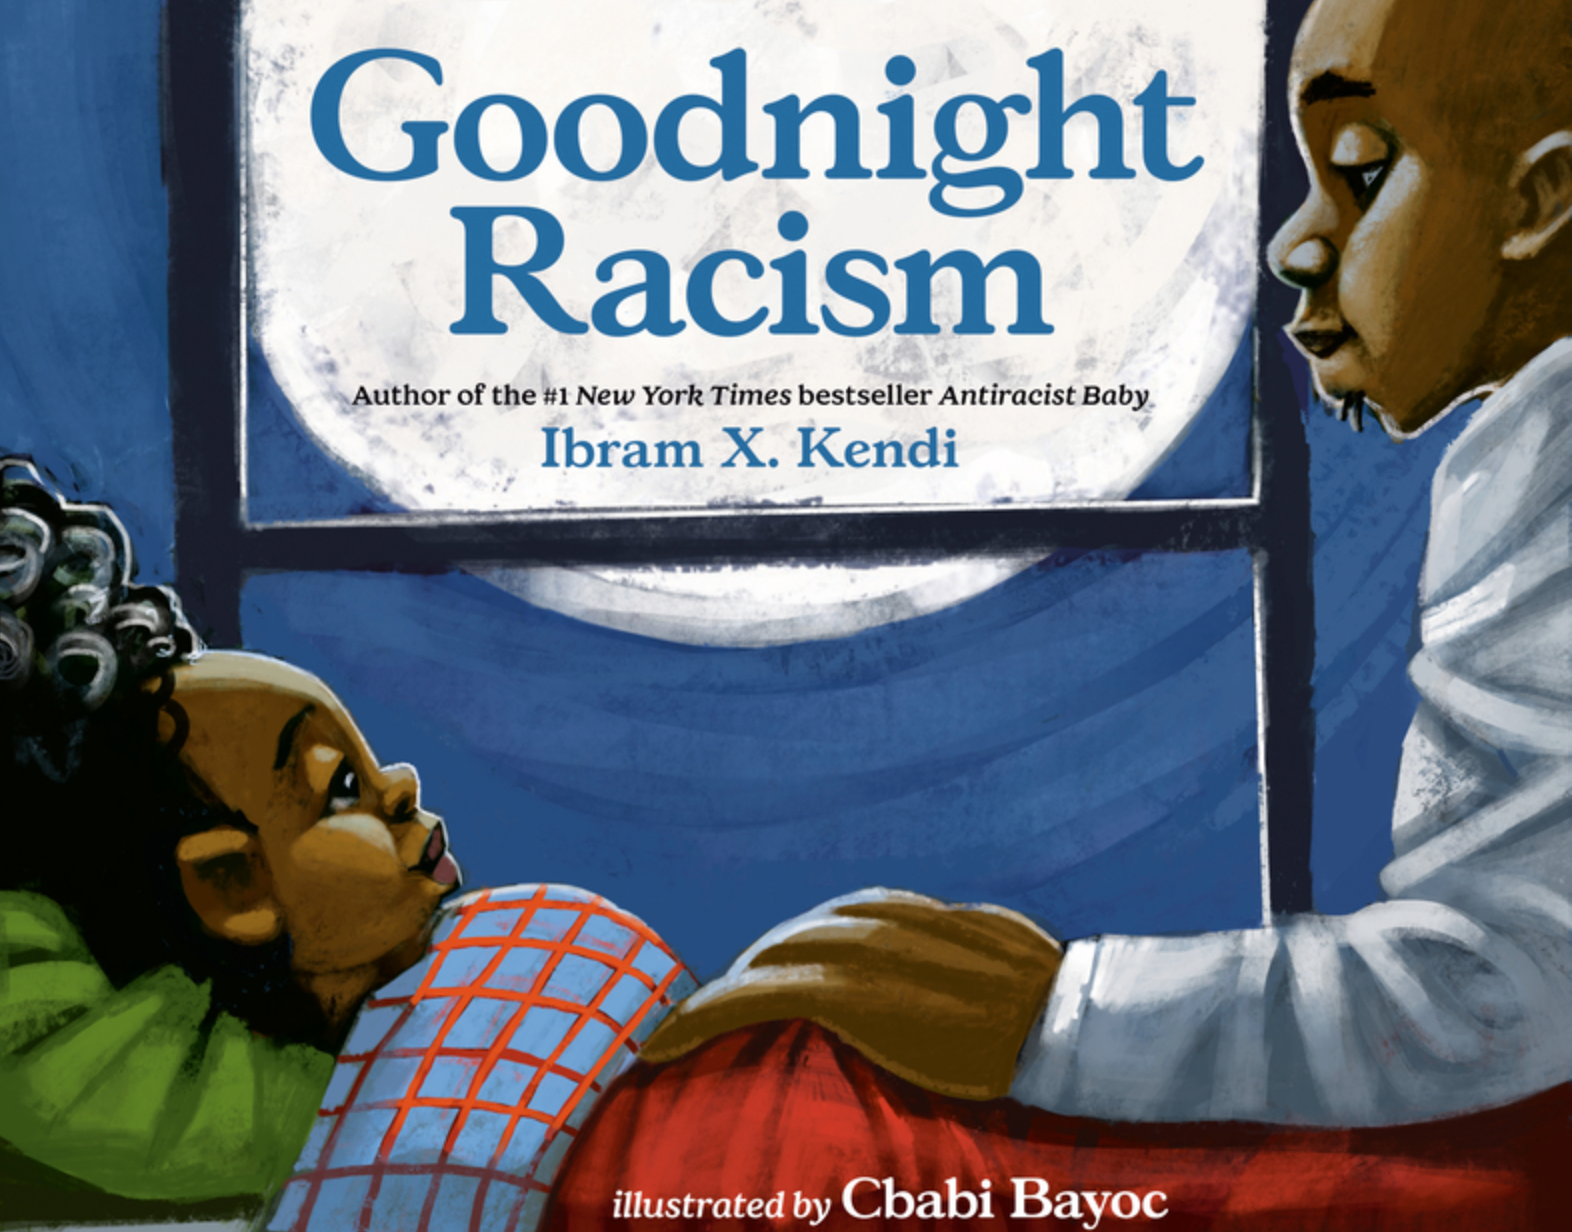 Goodnight Racism (NCTE)